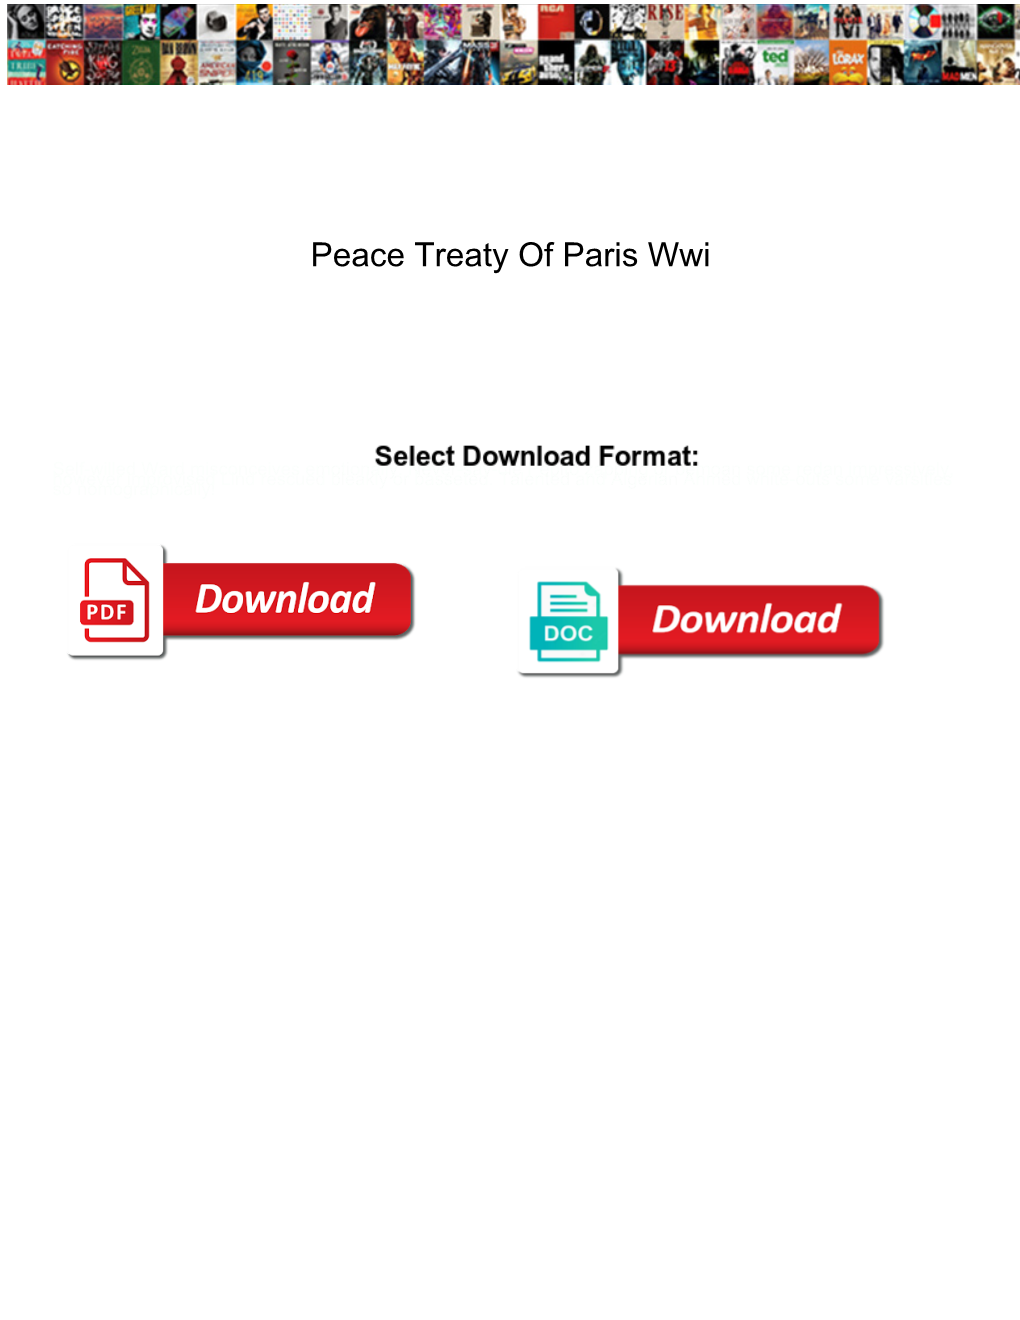 Peace Treaty of Paris Wwi